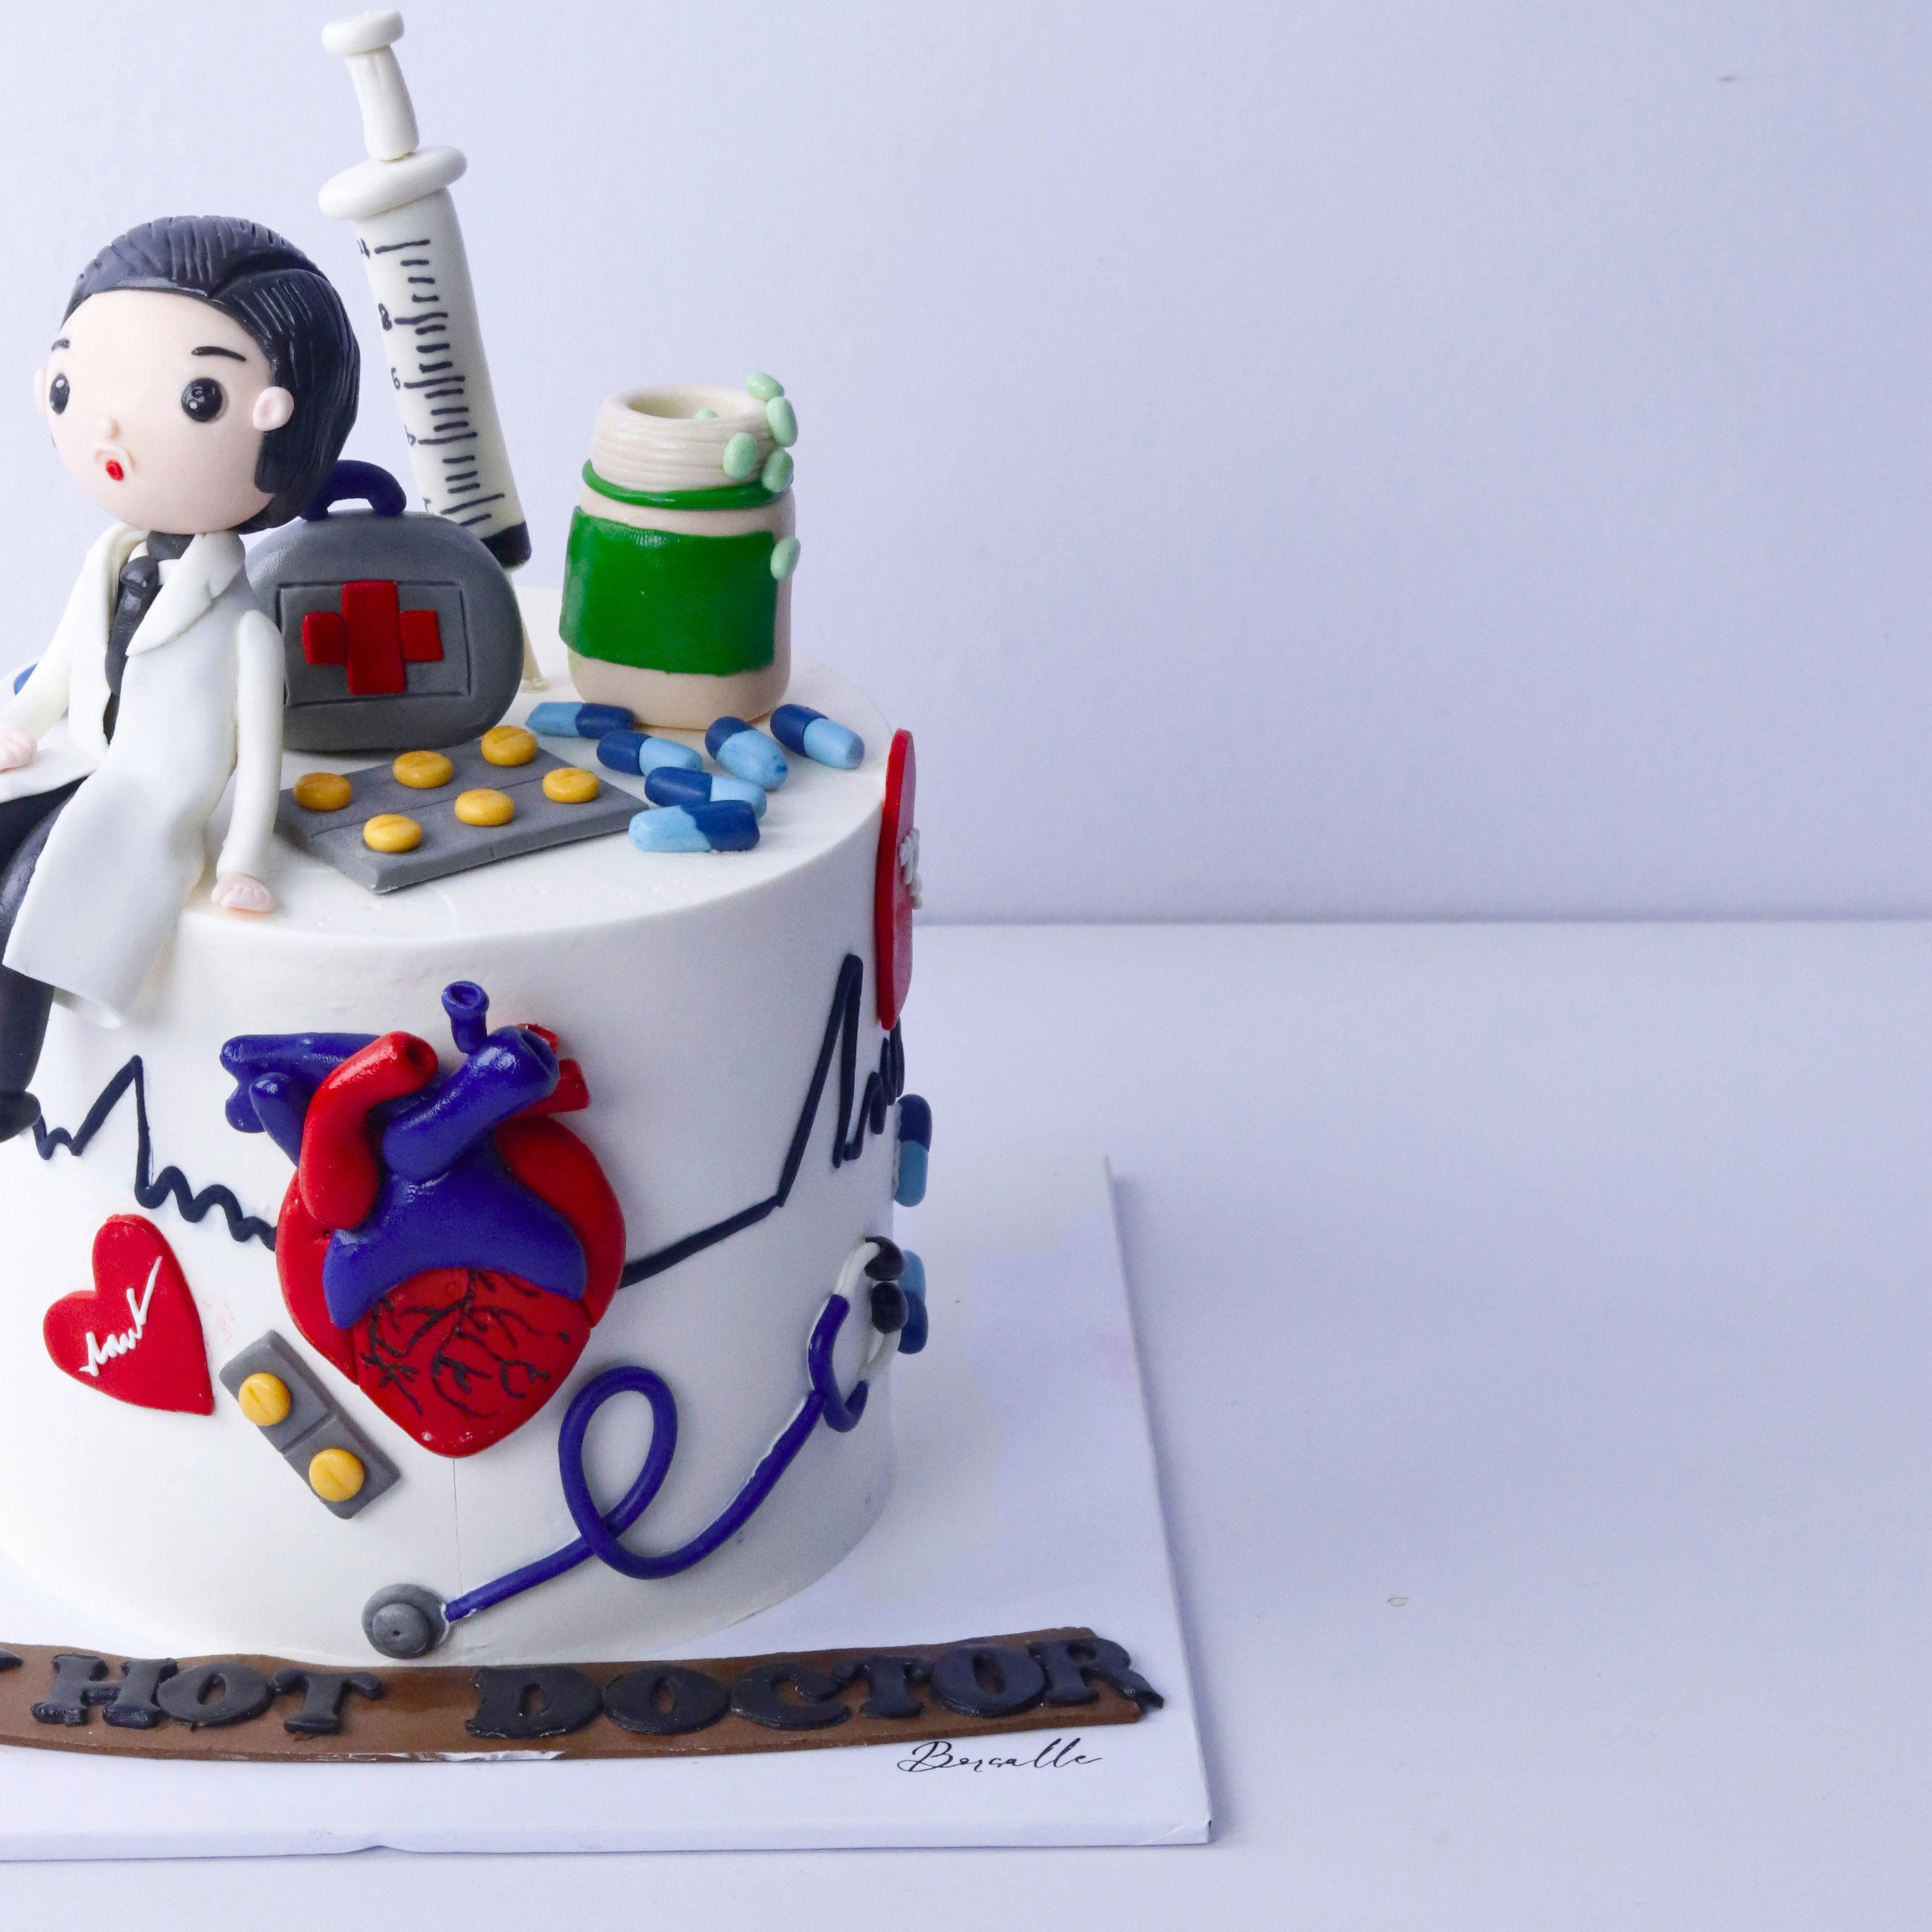 dentist birthday cake design | tooth cake design | dentist cake idea | dental  theme cake | cake idea - YouTube